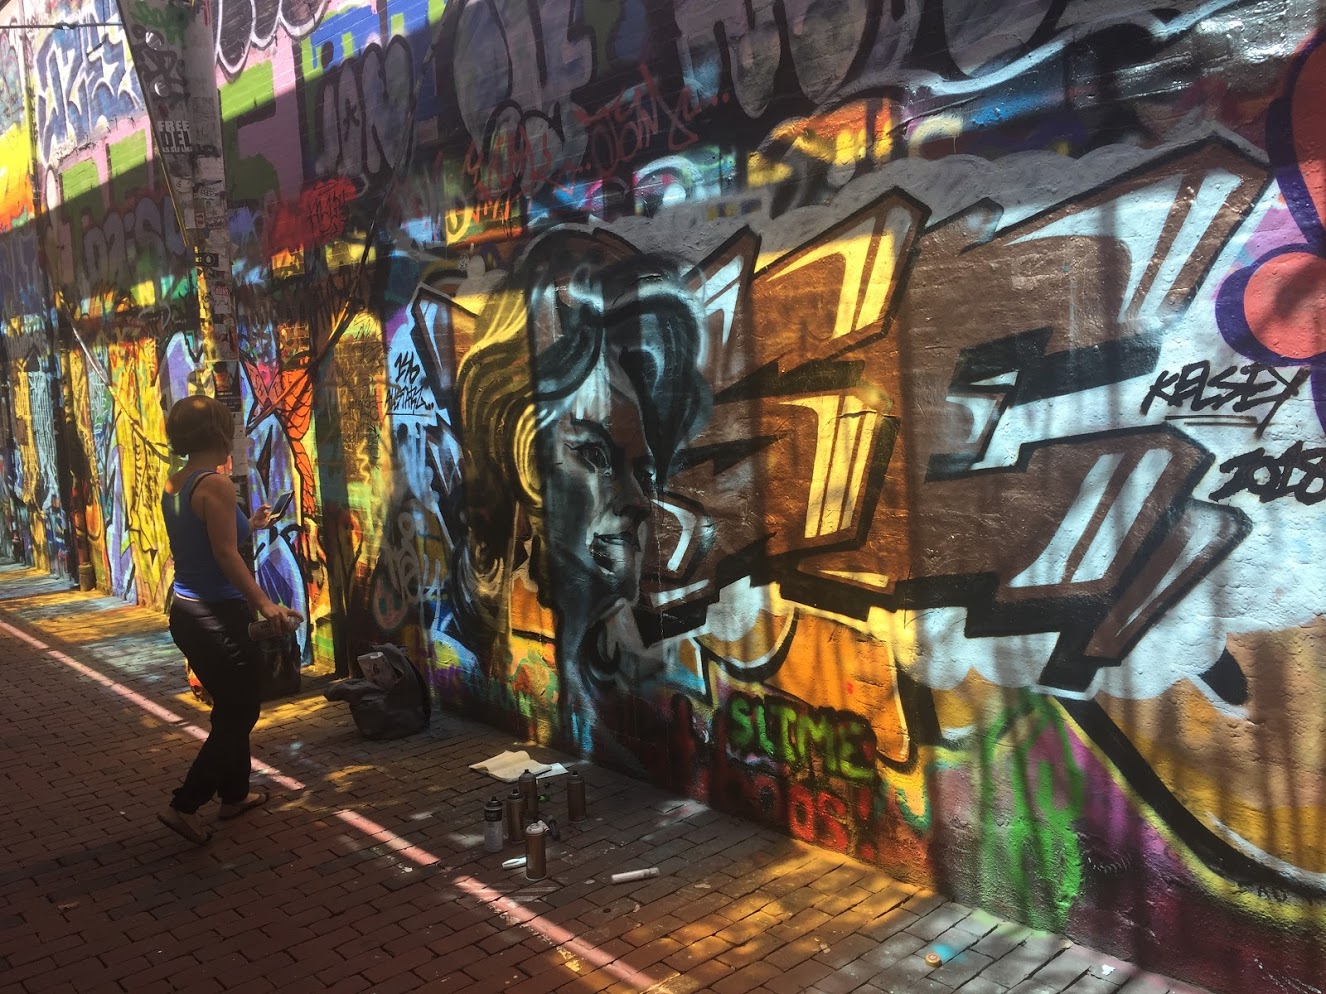 A graffiti artist polishing and admiring her labor in Graffiti Alley in Central Square, Cambridge, Massachusetts, 2018. —photo Tanbou.